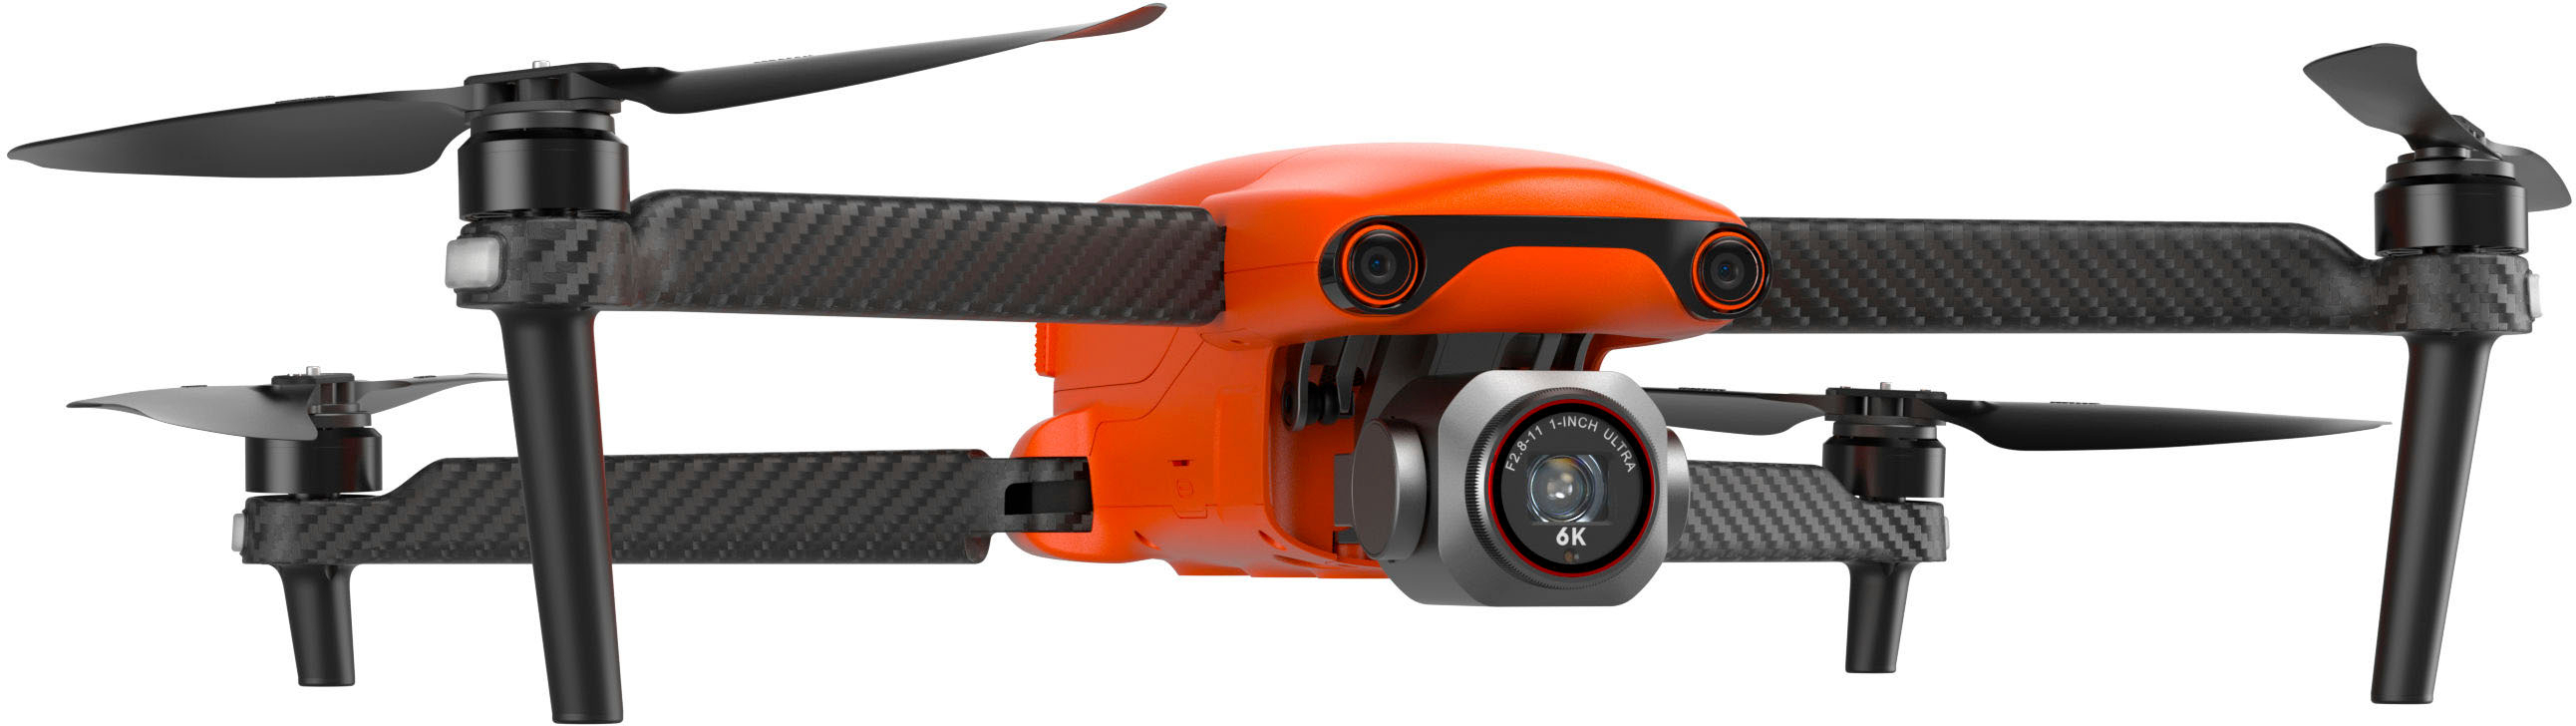 Angle View: Autel Robotics - EVO Lite+ Premium Bundle - Quadcopter with Remote Controller (Android and iOS compatible) - Orange